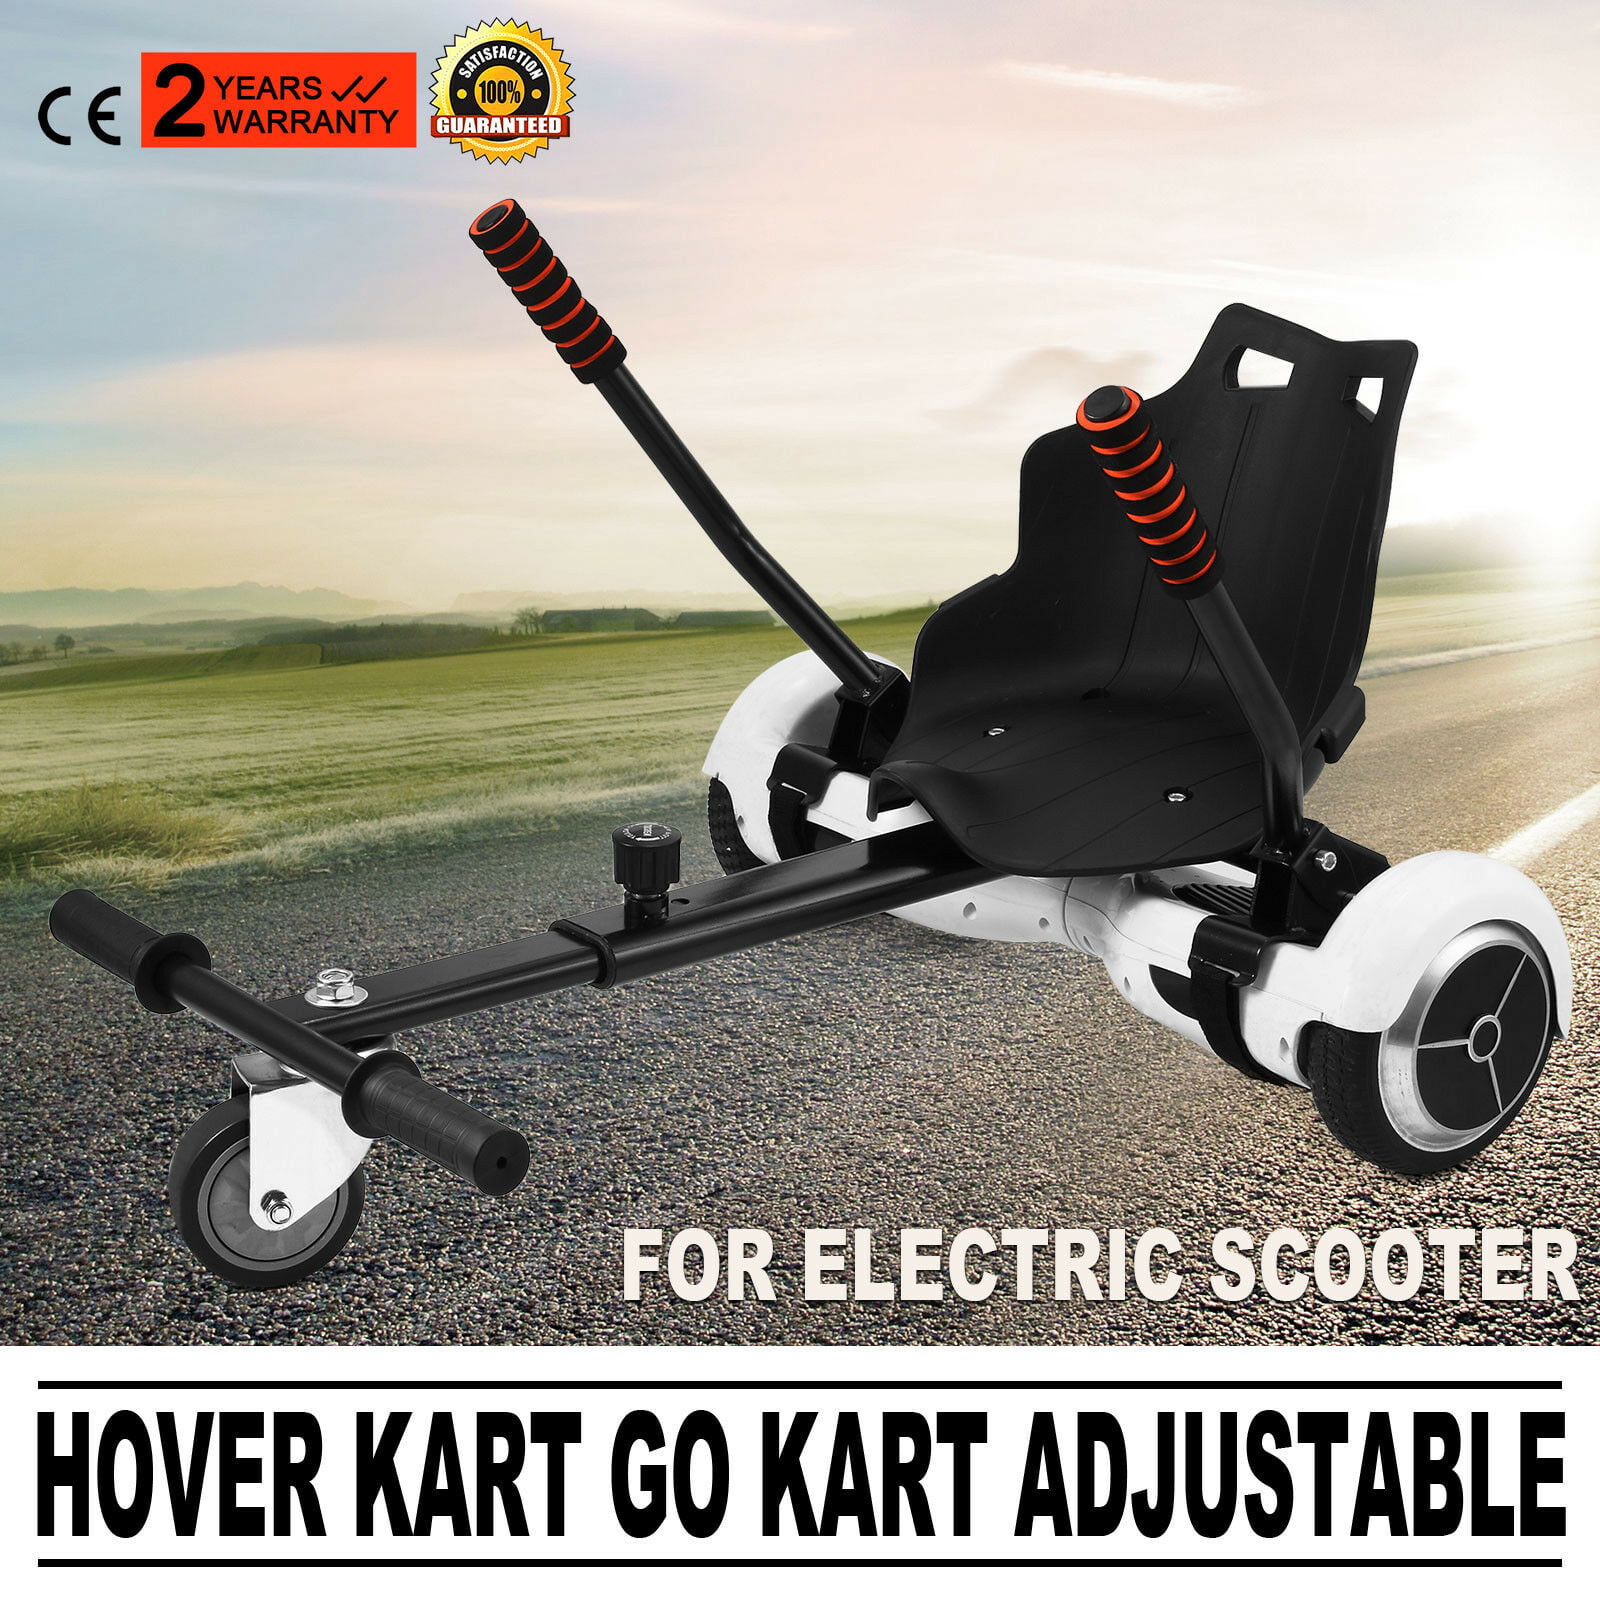 Hovercart Hover Kart GoKart Adjustable For Self Balancing Board E-scooter Black